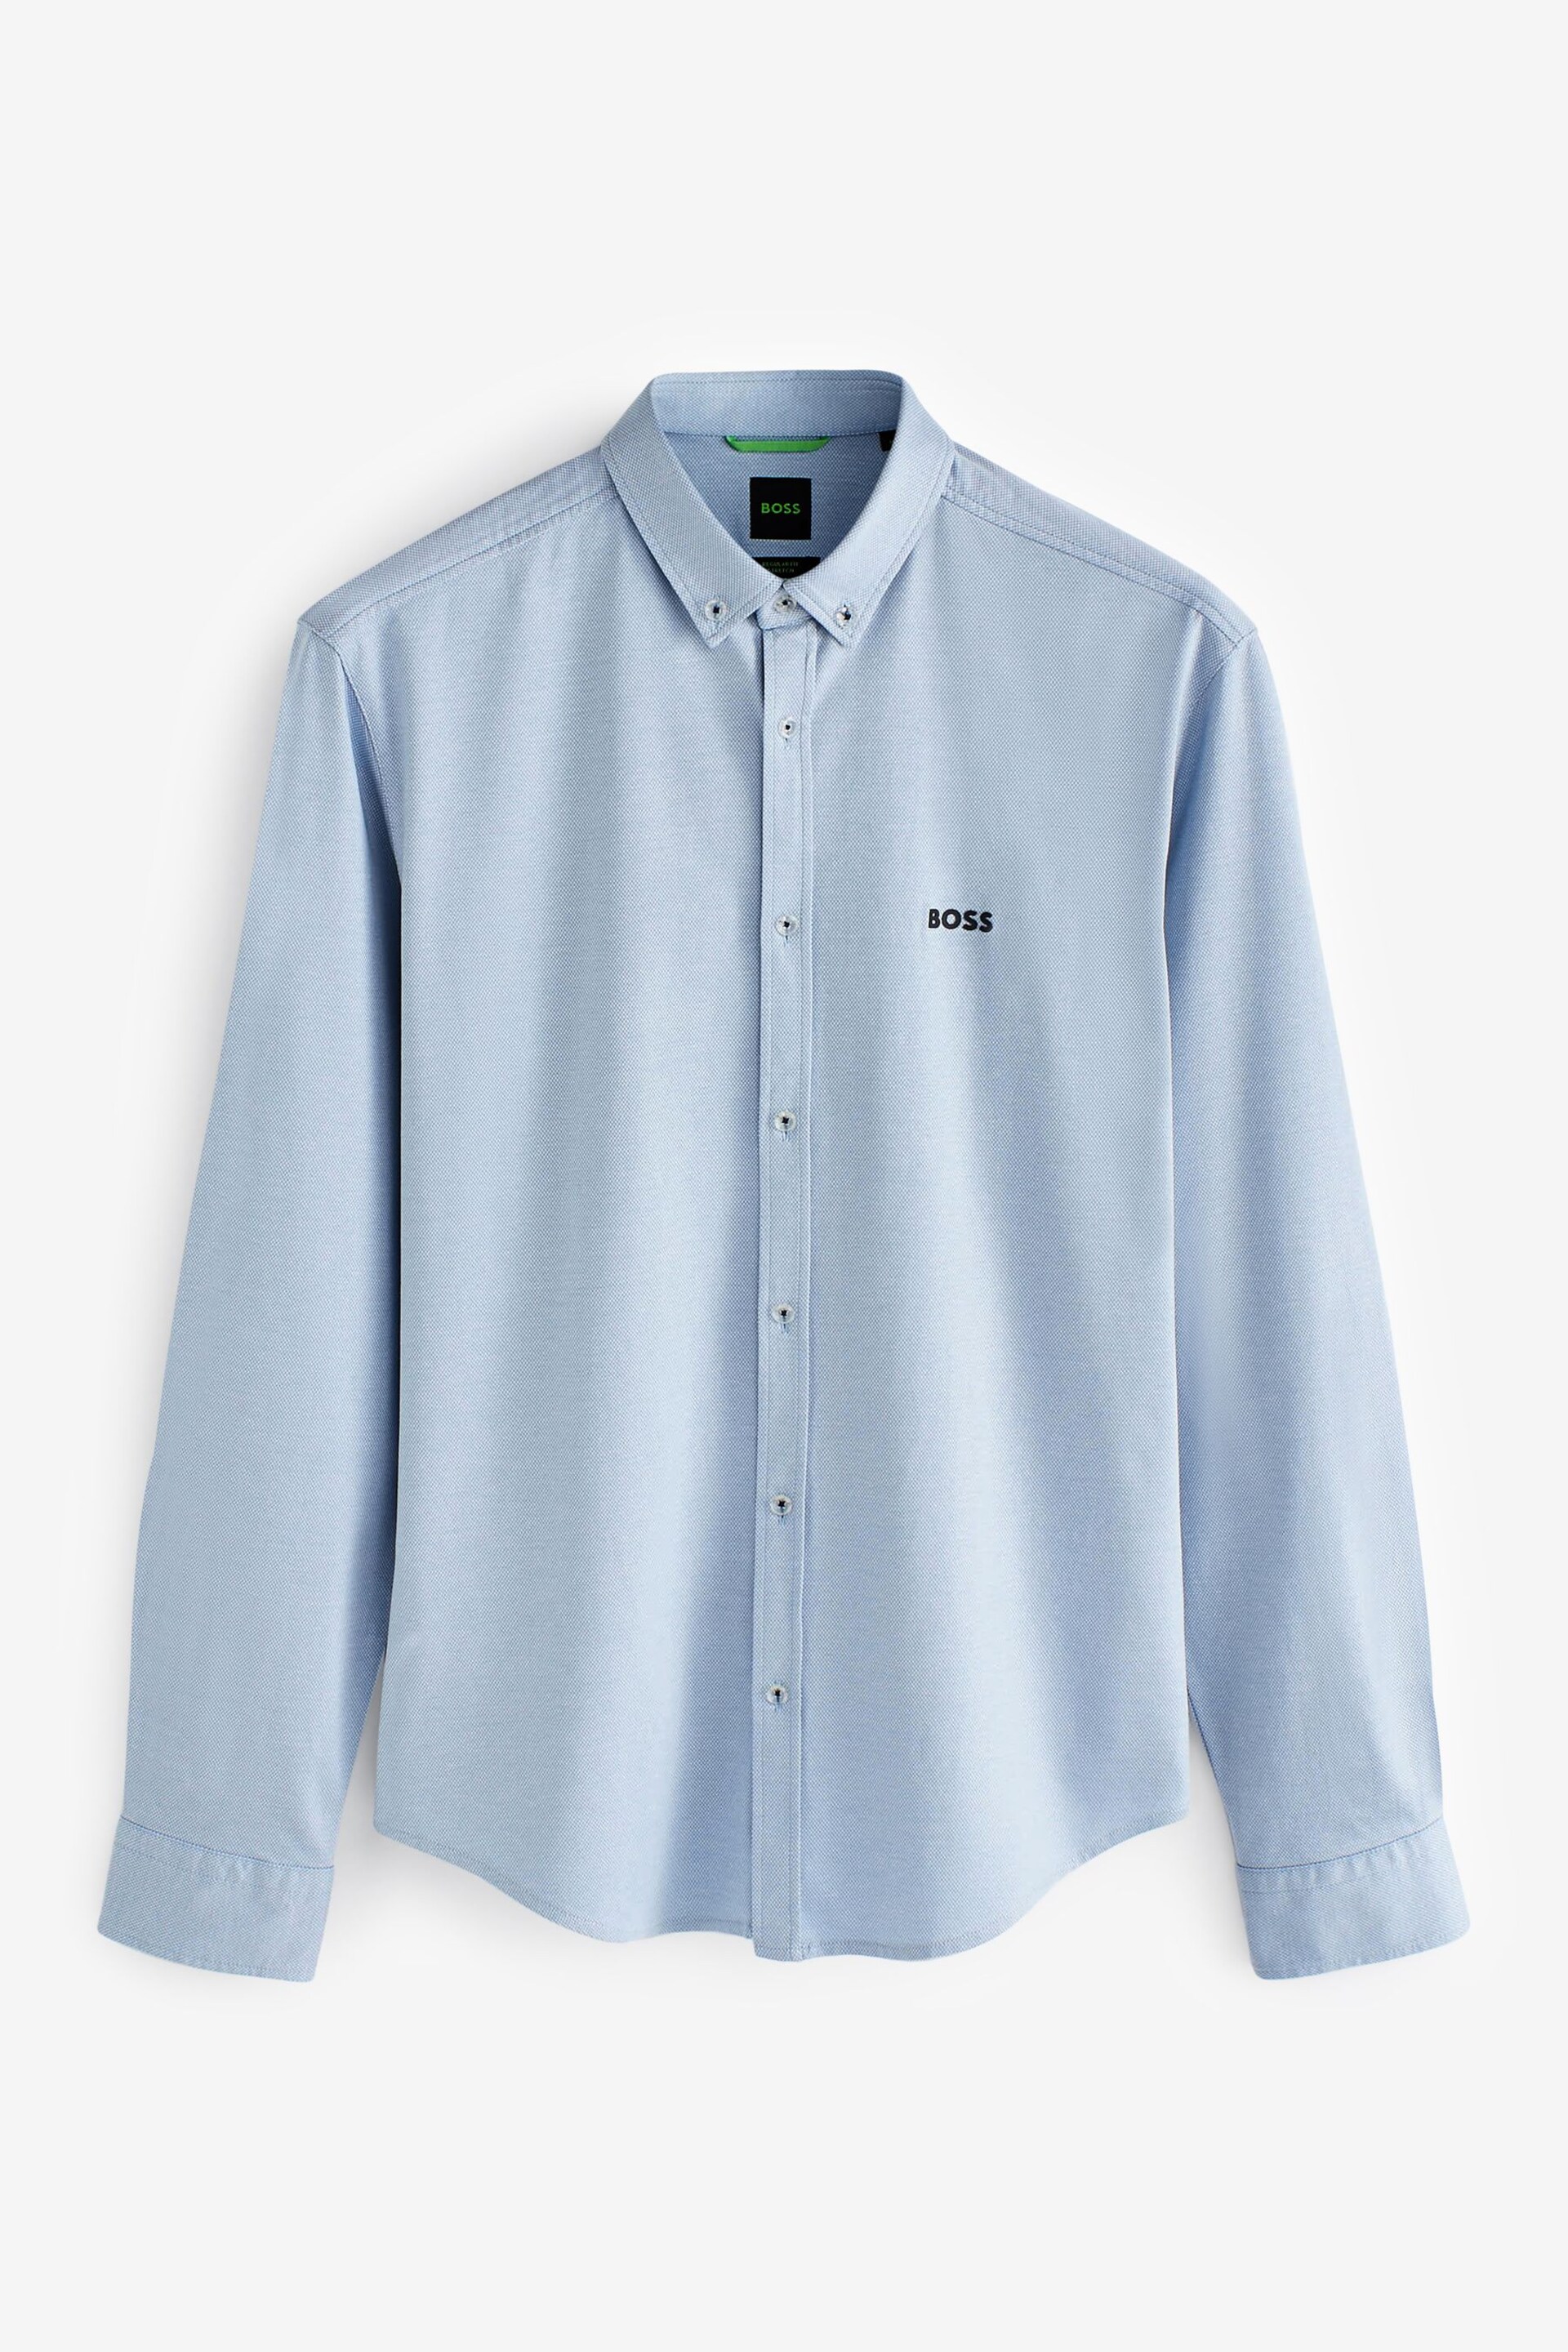 BOSS Blue Biado Long Sleeve Jersey Shirt - Image 4 of 4